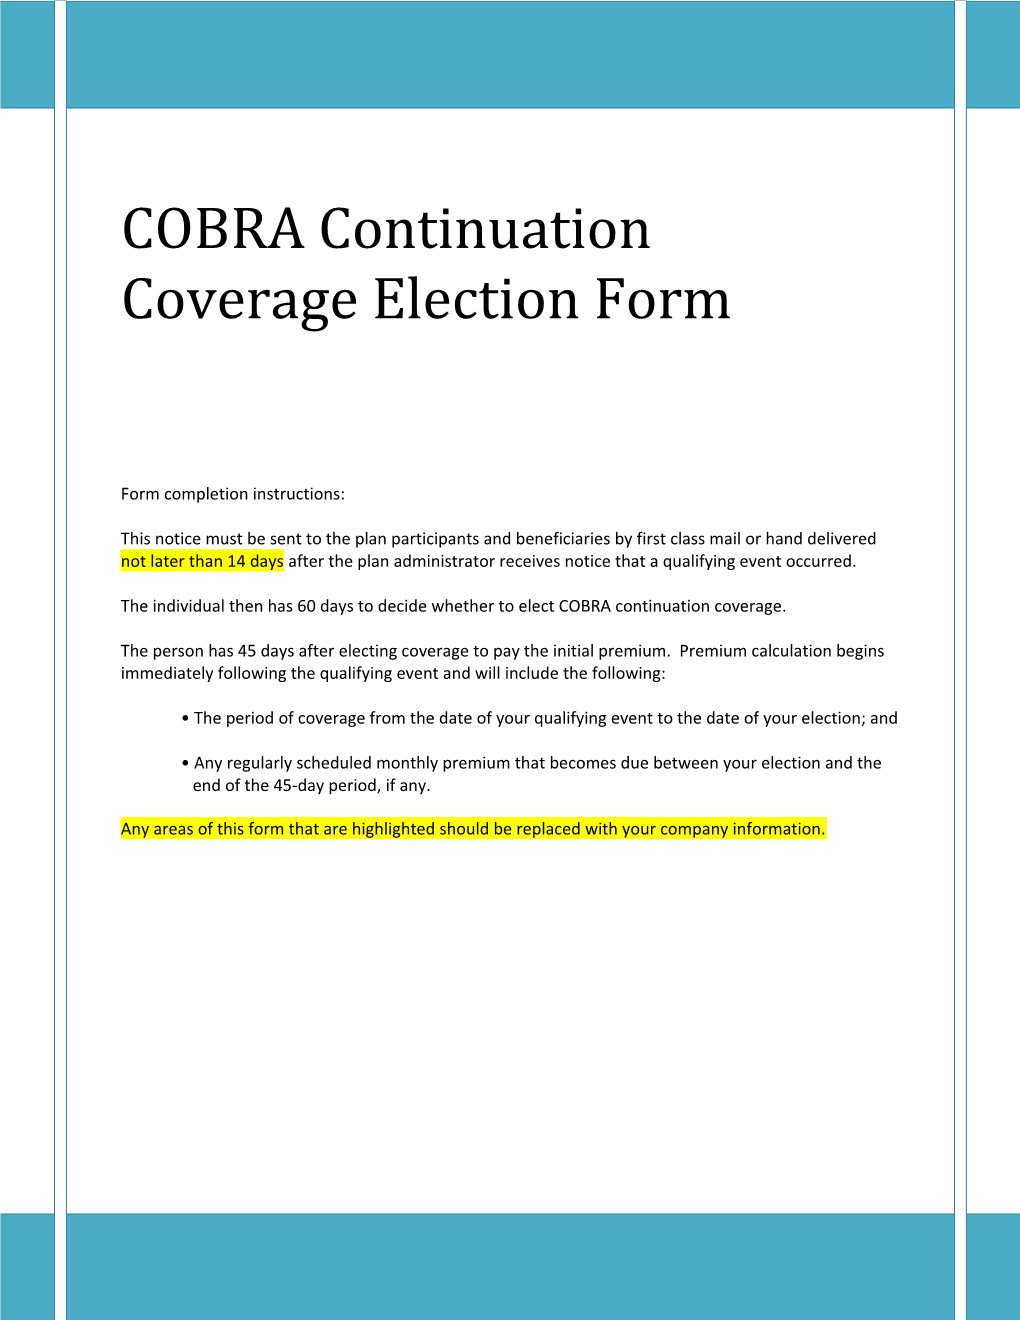 COBRA Continuation Coverage Election Form